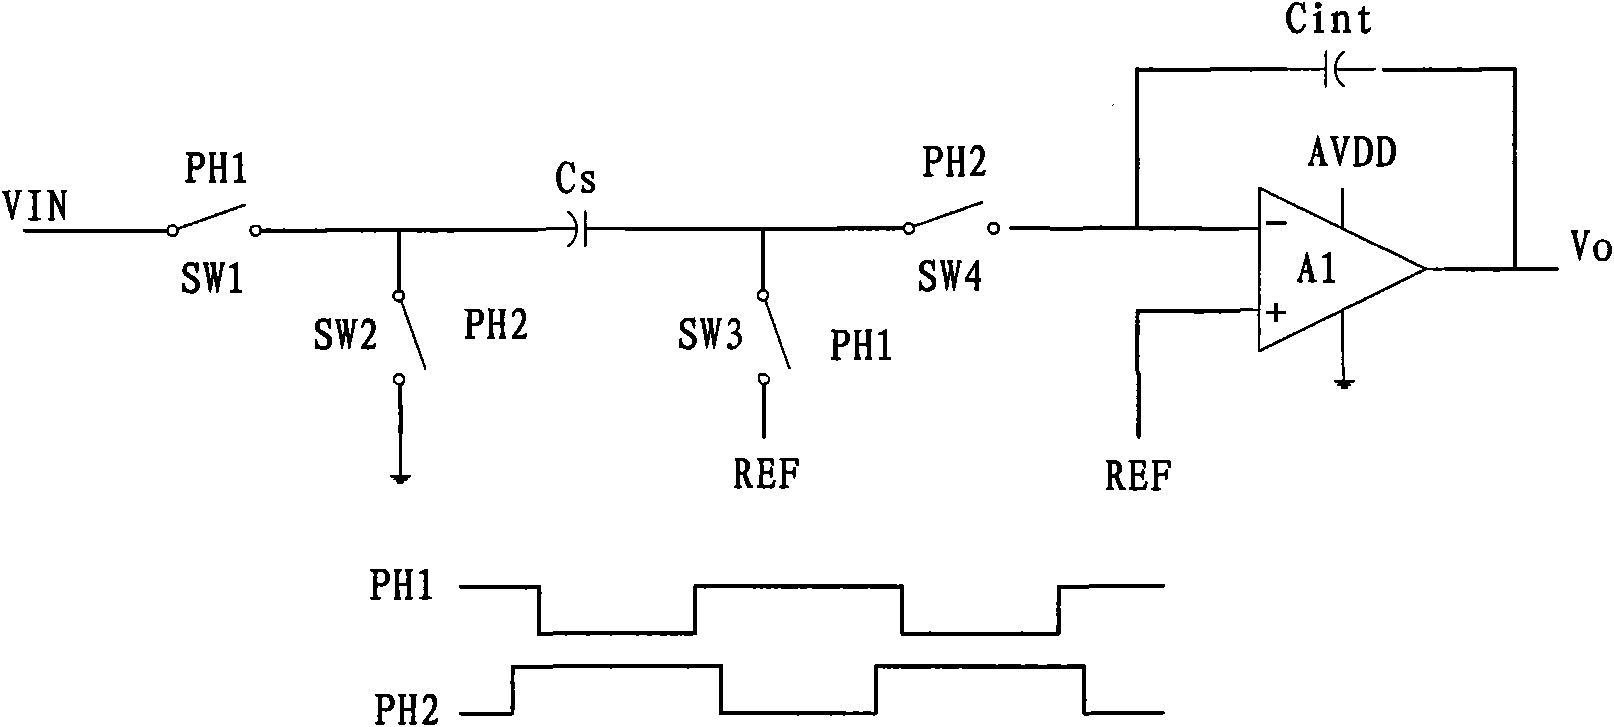 Analog signal sampling circuit and switch capacitance circuit